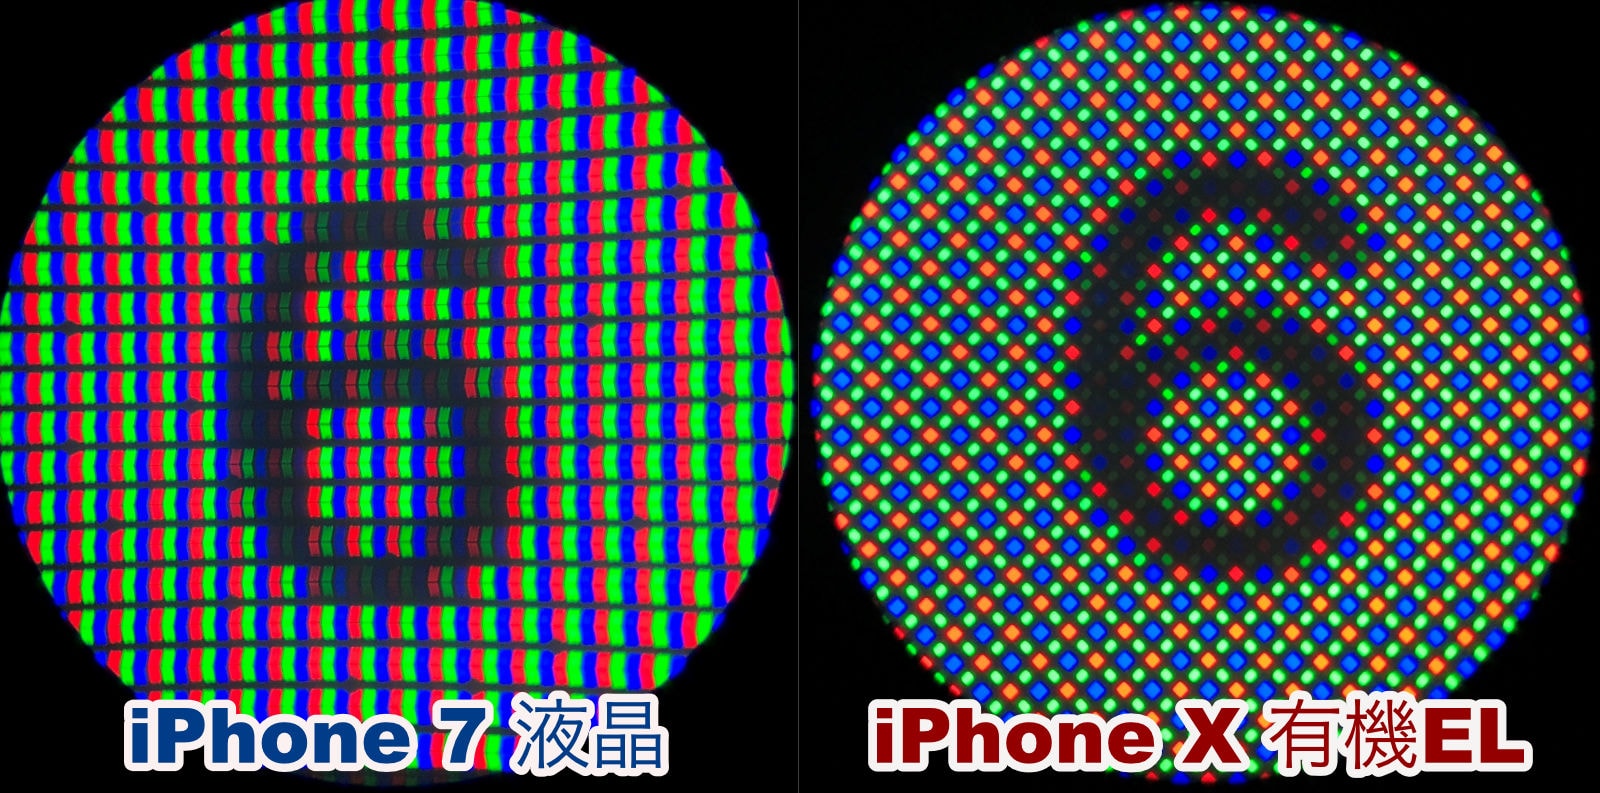 Iphone X の有機elと Iphone 7 の液晶 顕微鏡で見ると違いが